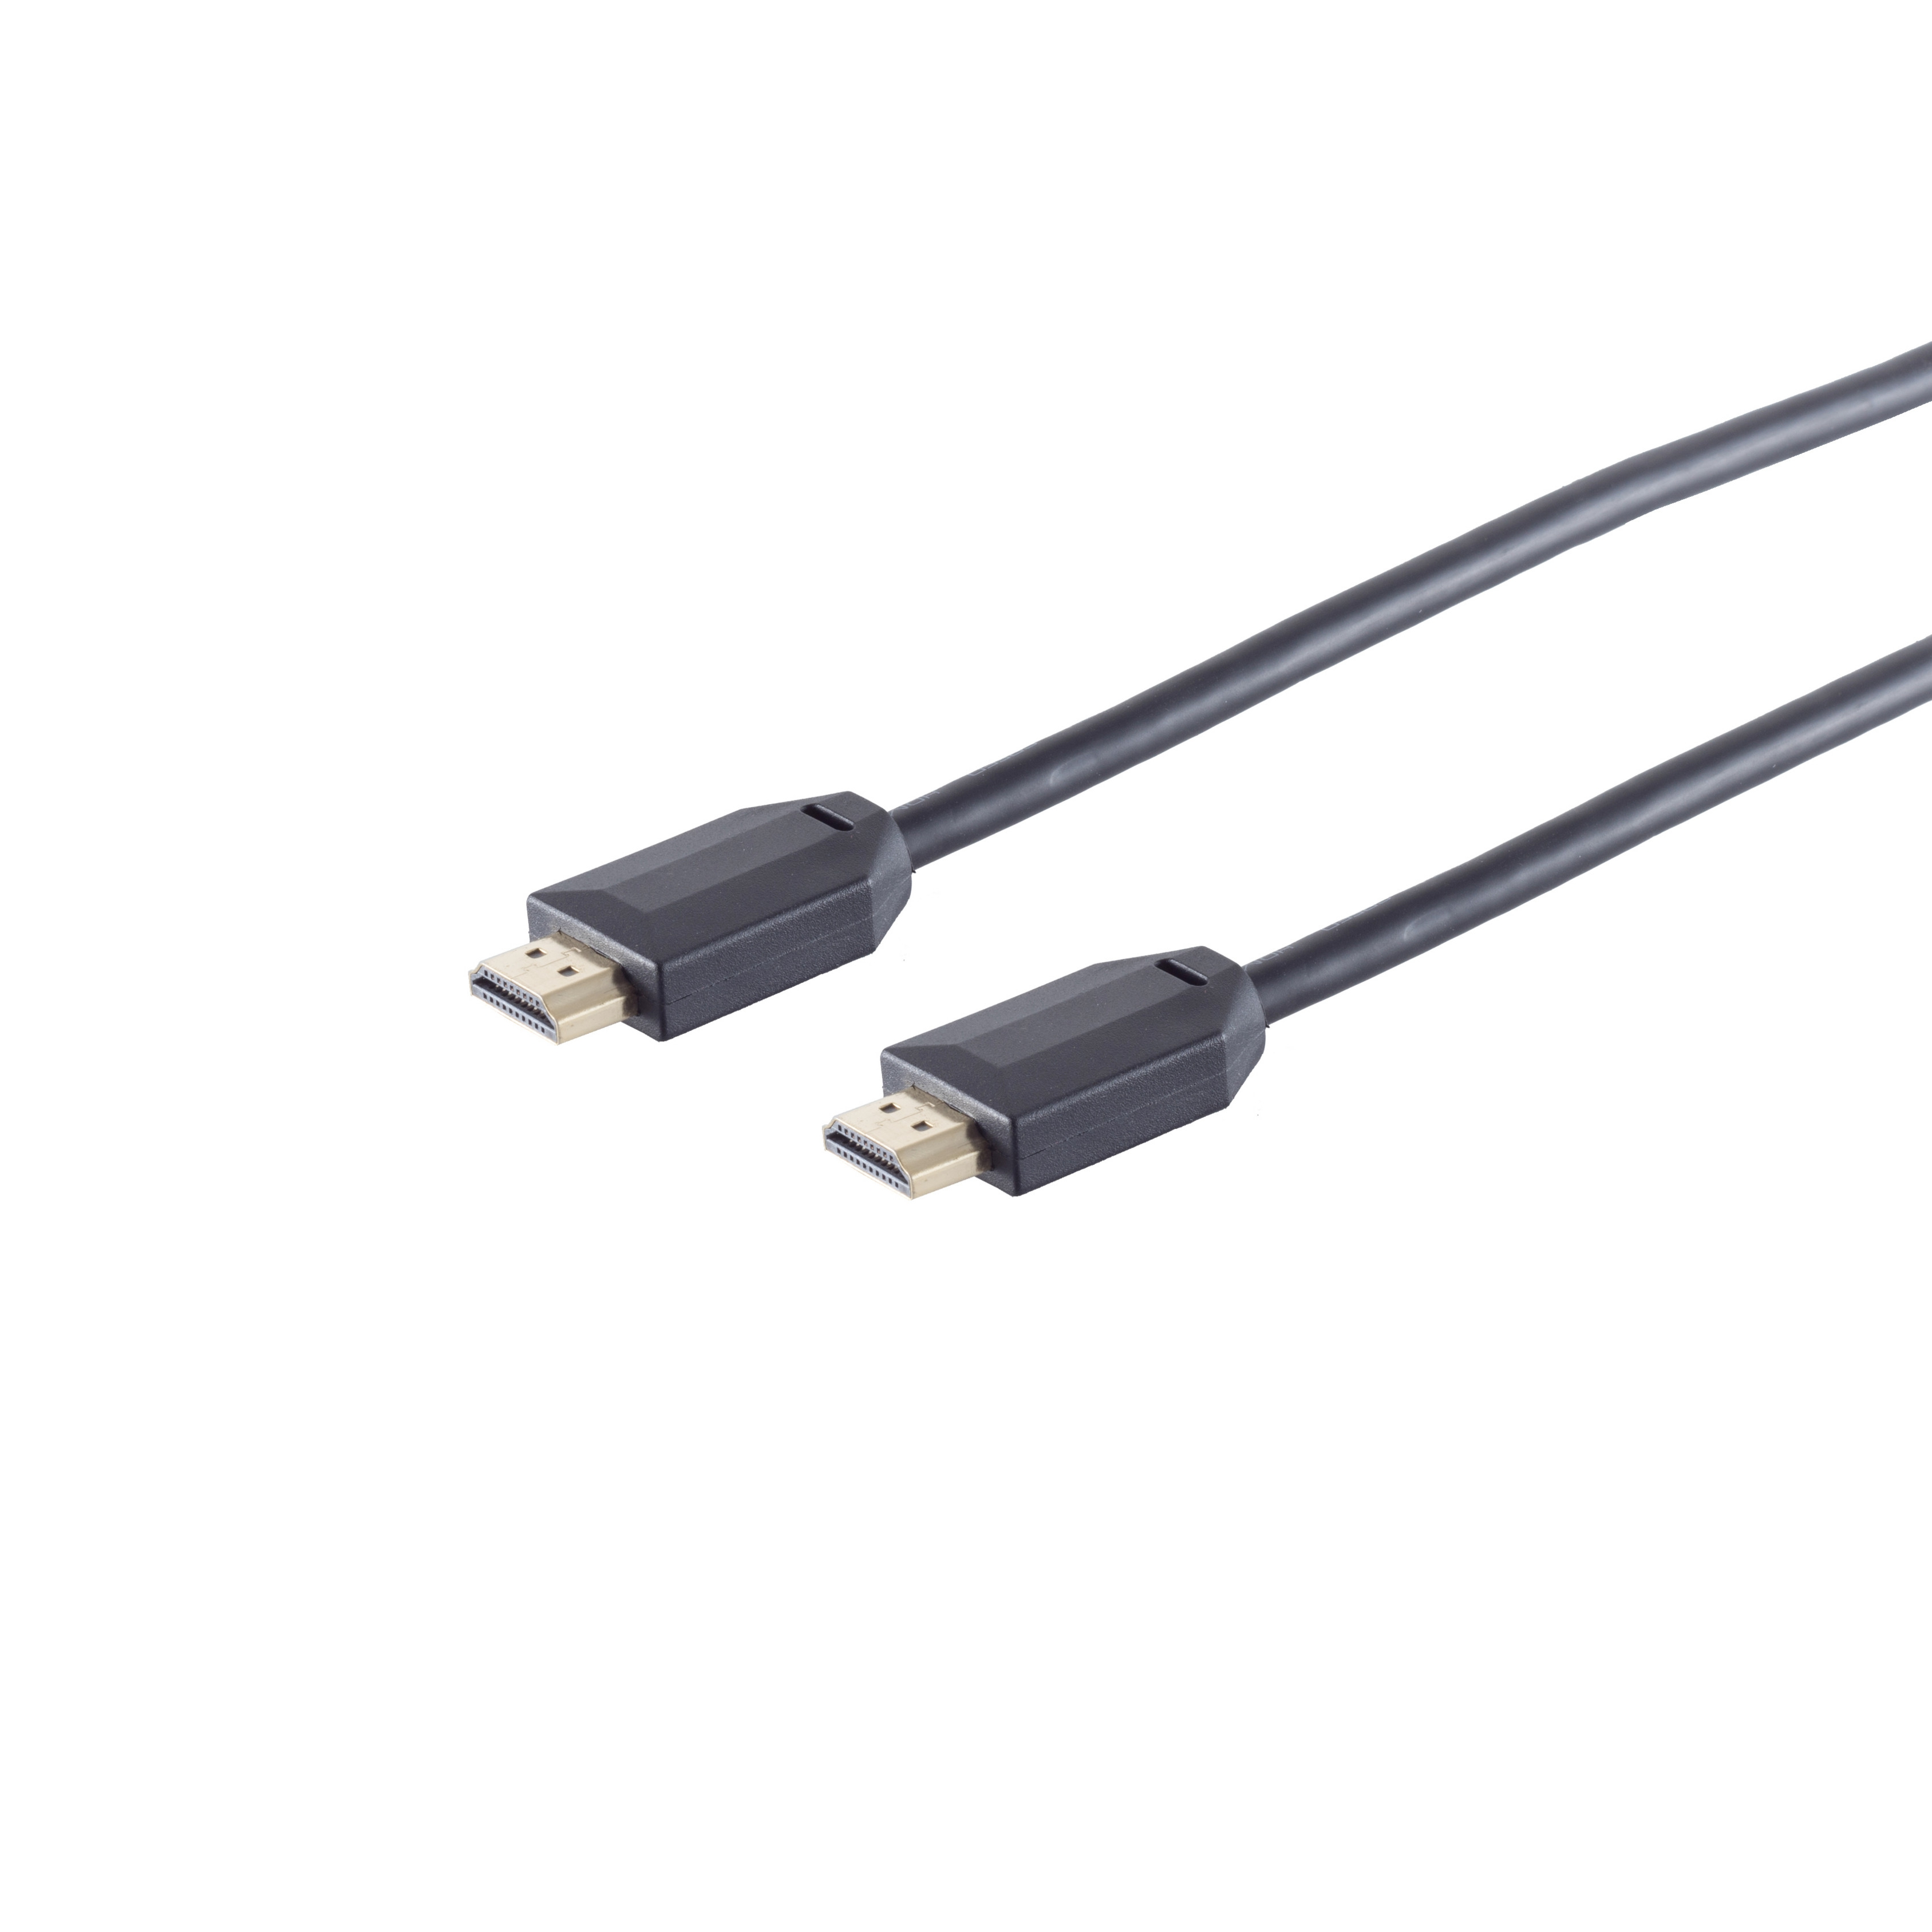 S/CONN MAXIMUM Kabel Ultra 1m Kabel, 10K, CONNECTIVITY PVC, schwarz, HDMI HDMI